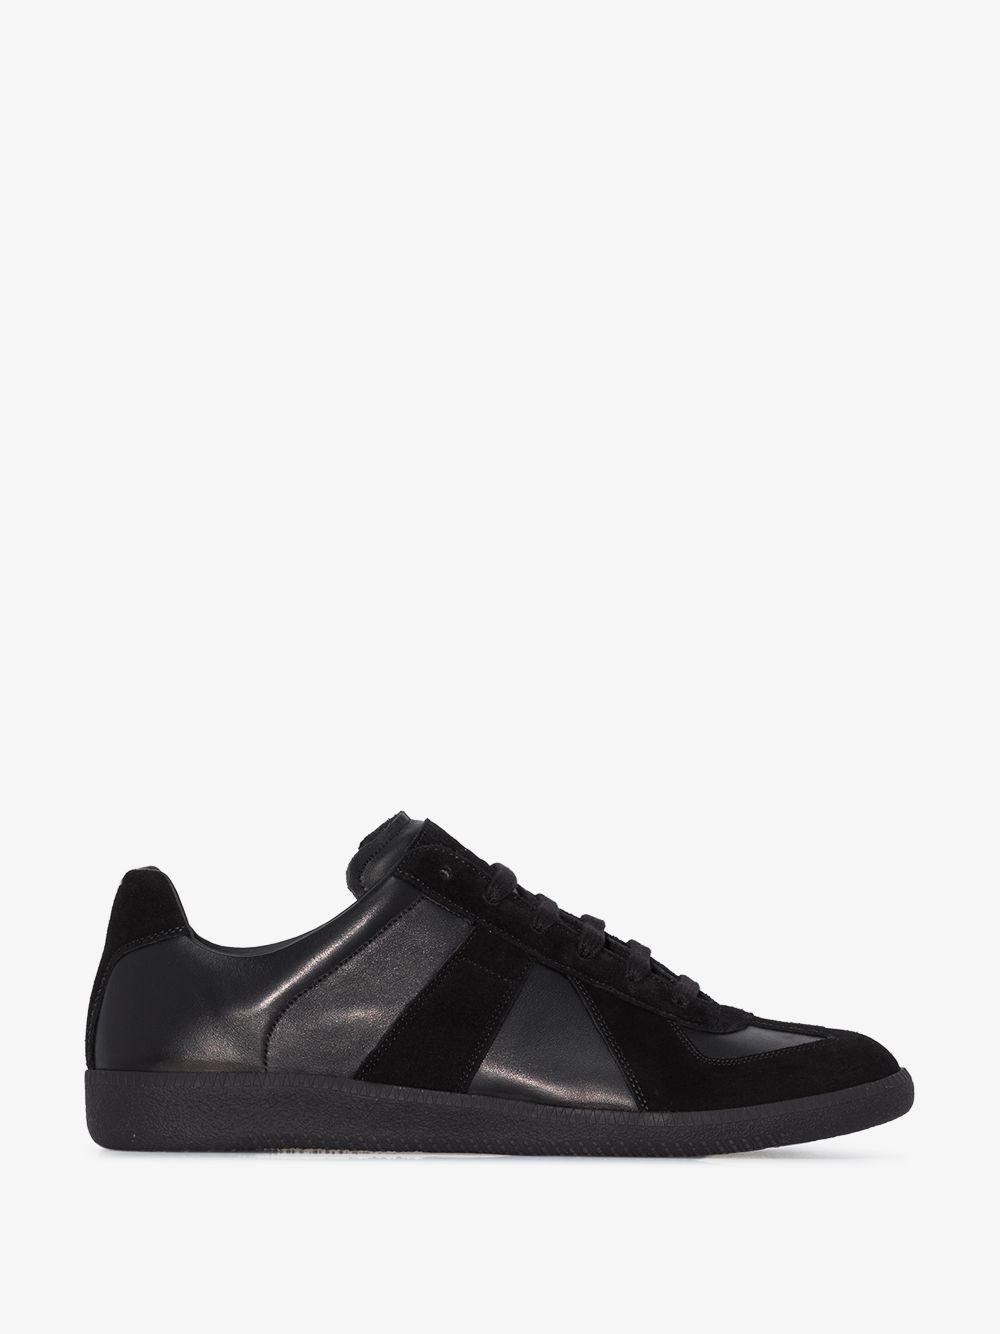 Maison Margiela Replica Leather Sneakers in Black for Men - Lyst